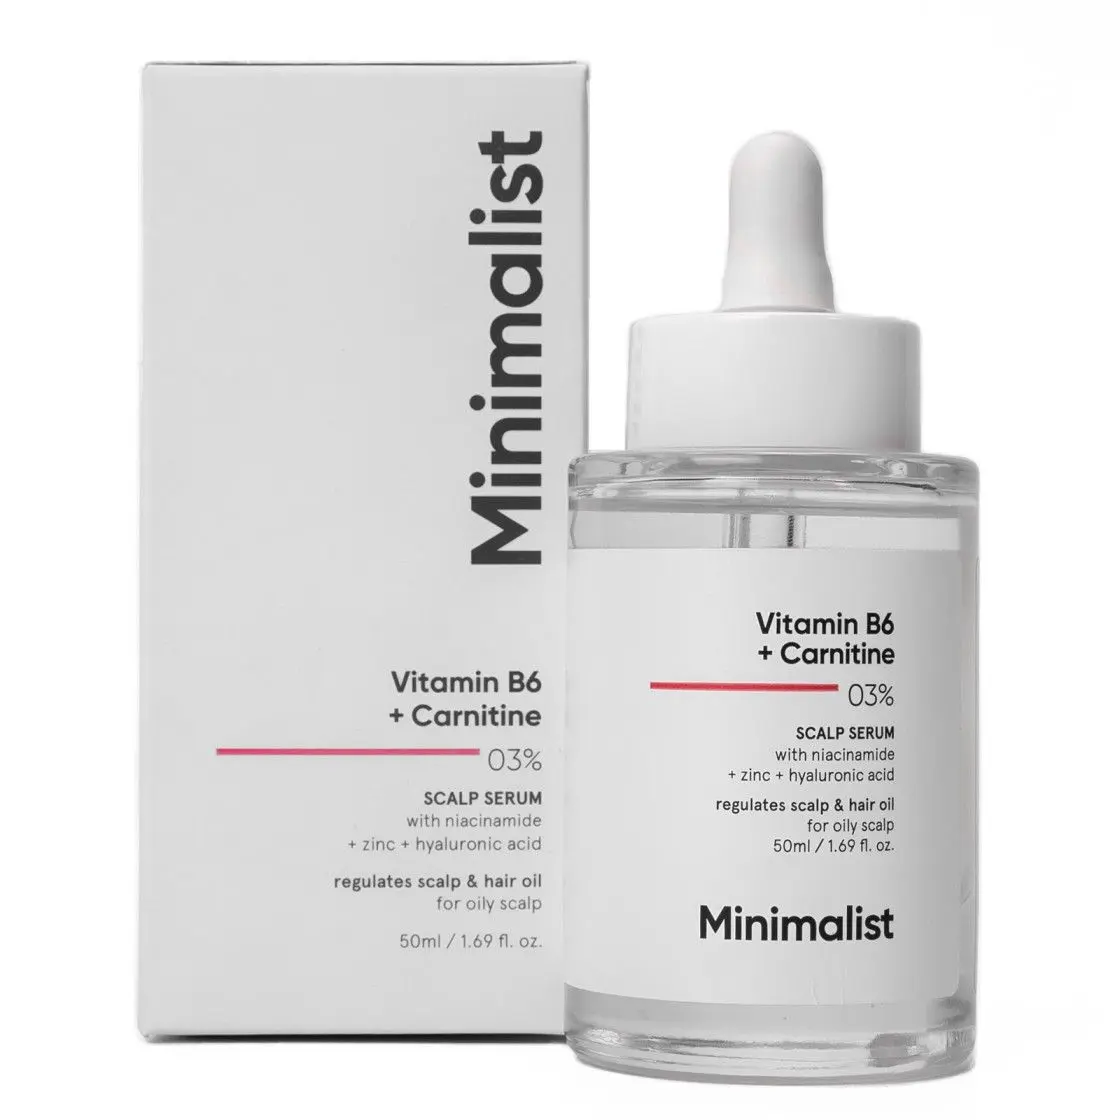 Minimalist Oil-control Hair Serum | 03% Vitamin B6 & Carnitine Scalp Serum for Sebum & Oil control with Niacinamide, Zinc, & Hyaluronic acid 50 ml